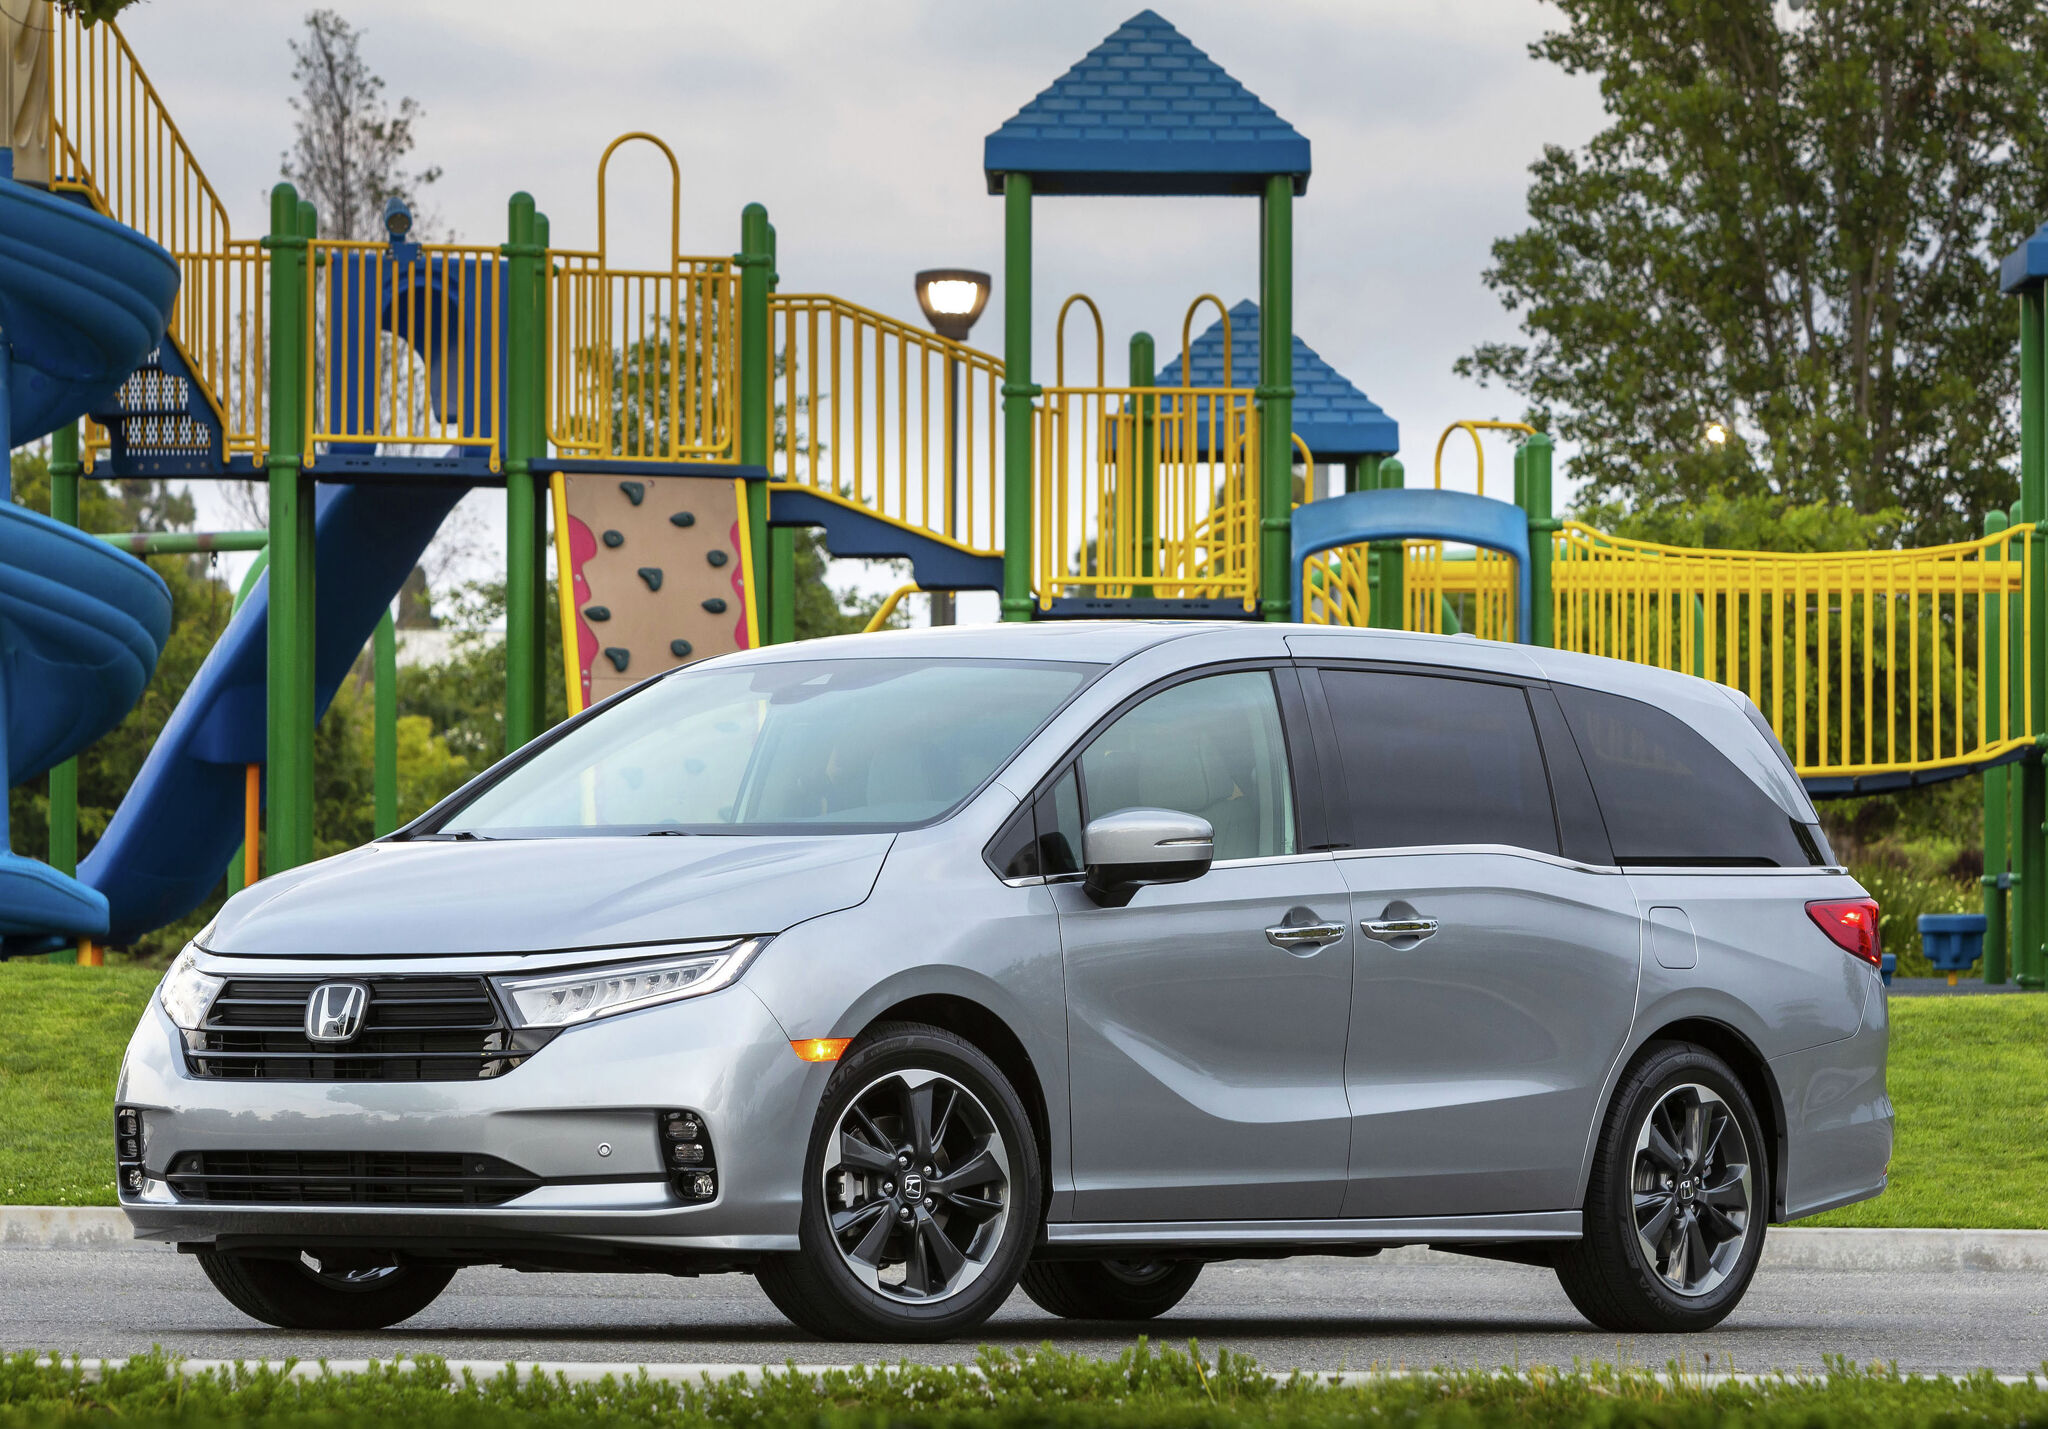 Hondas Odyssey Minivan Includes Premium Features Safety Technology